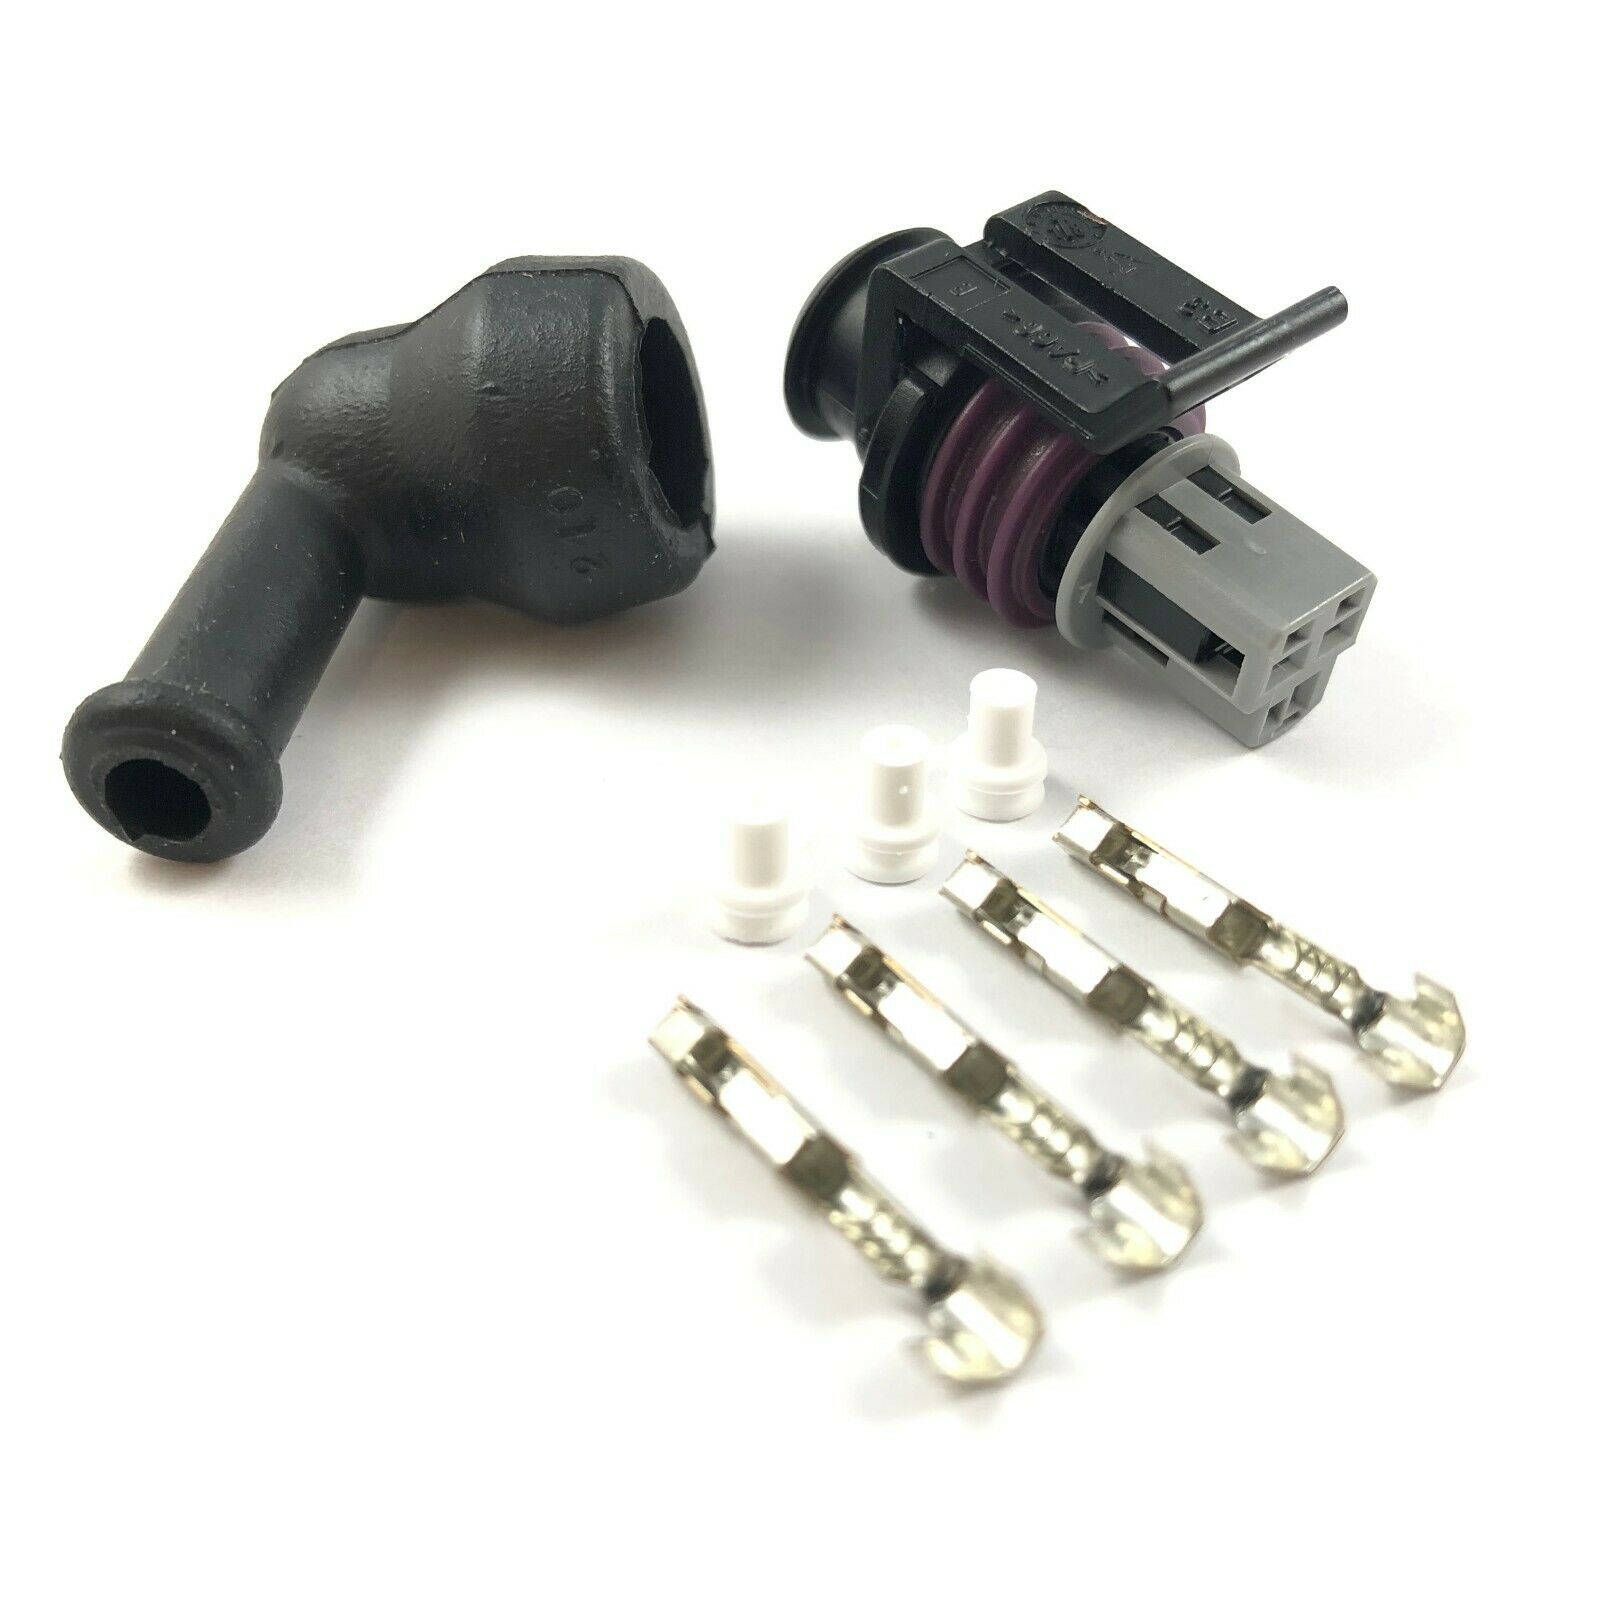 Delphi Gt150 3-pin Pressure Sensor Connector Plug Kit W/ Boot 22-20 Awg